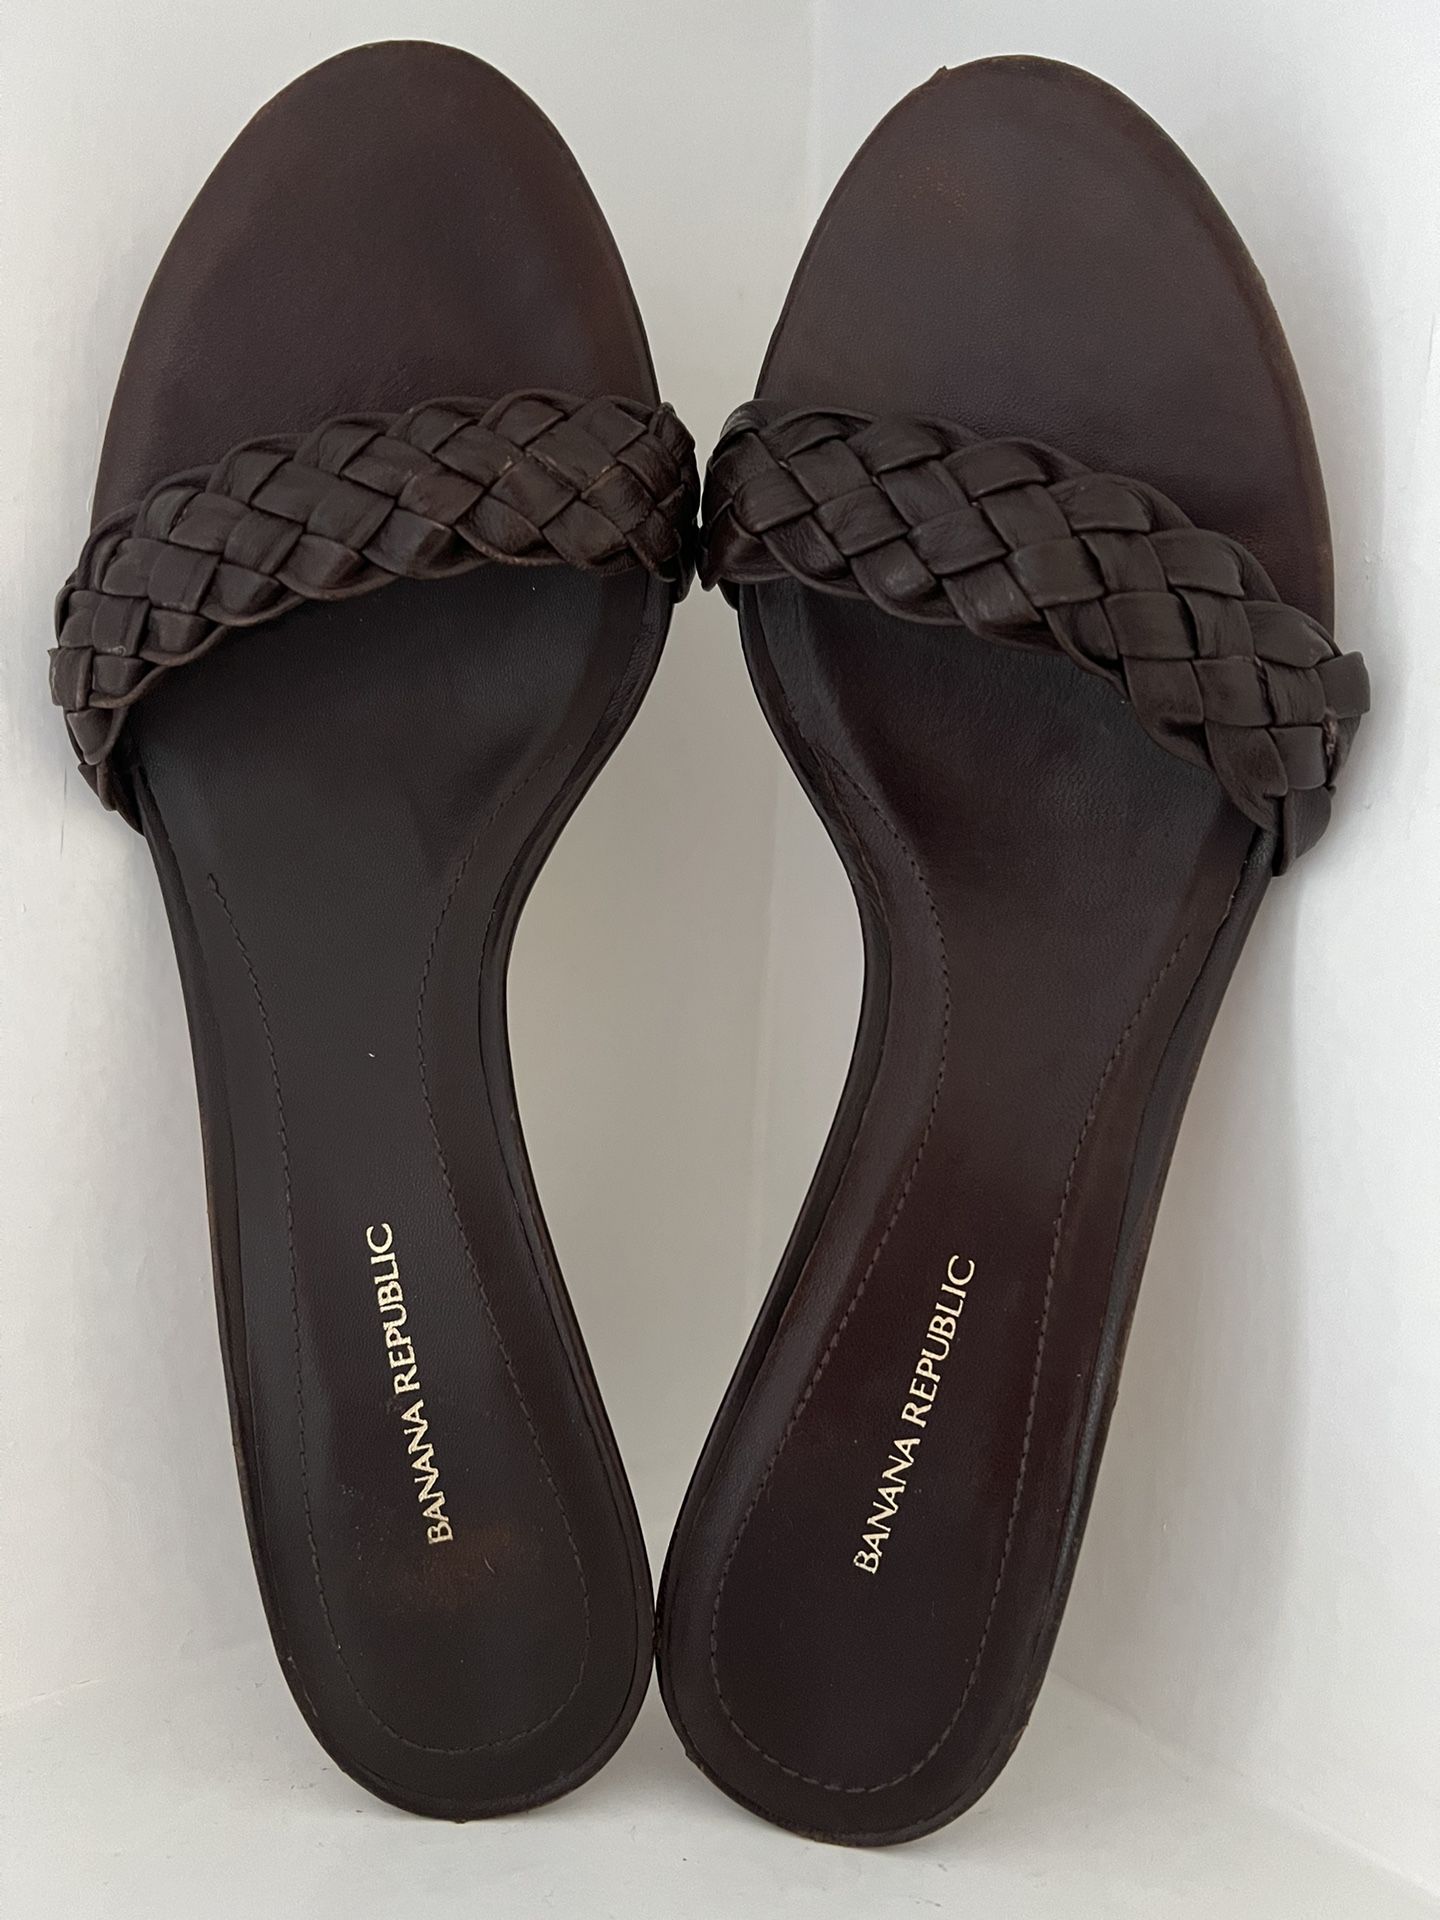 Banana Republic Woman’s Kitten Heel | Brown Leather | Size 7.5 $50 OBO